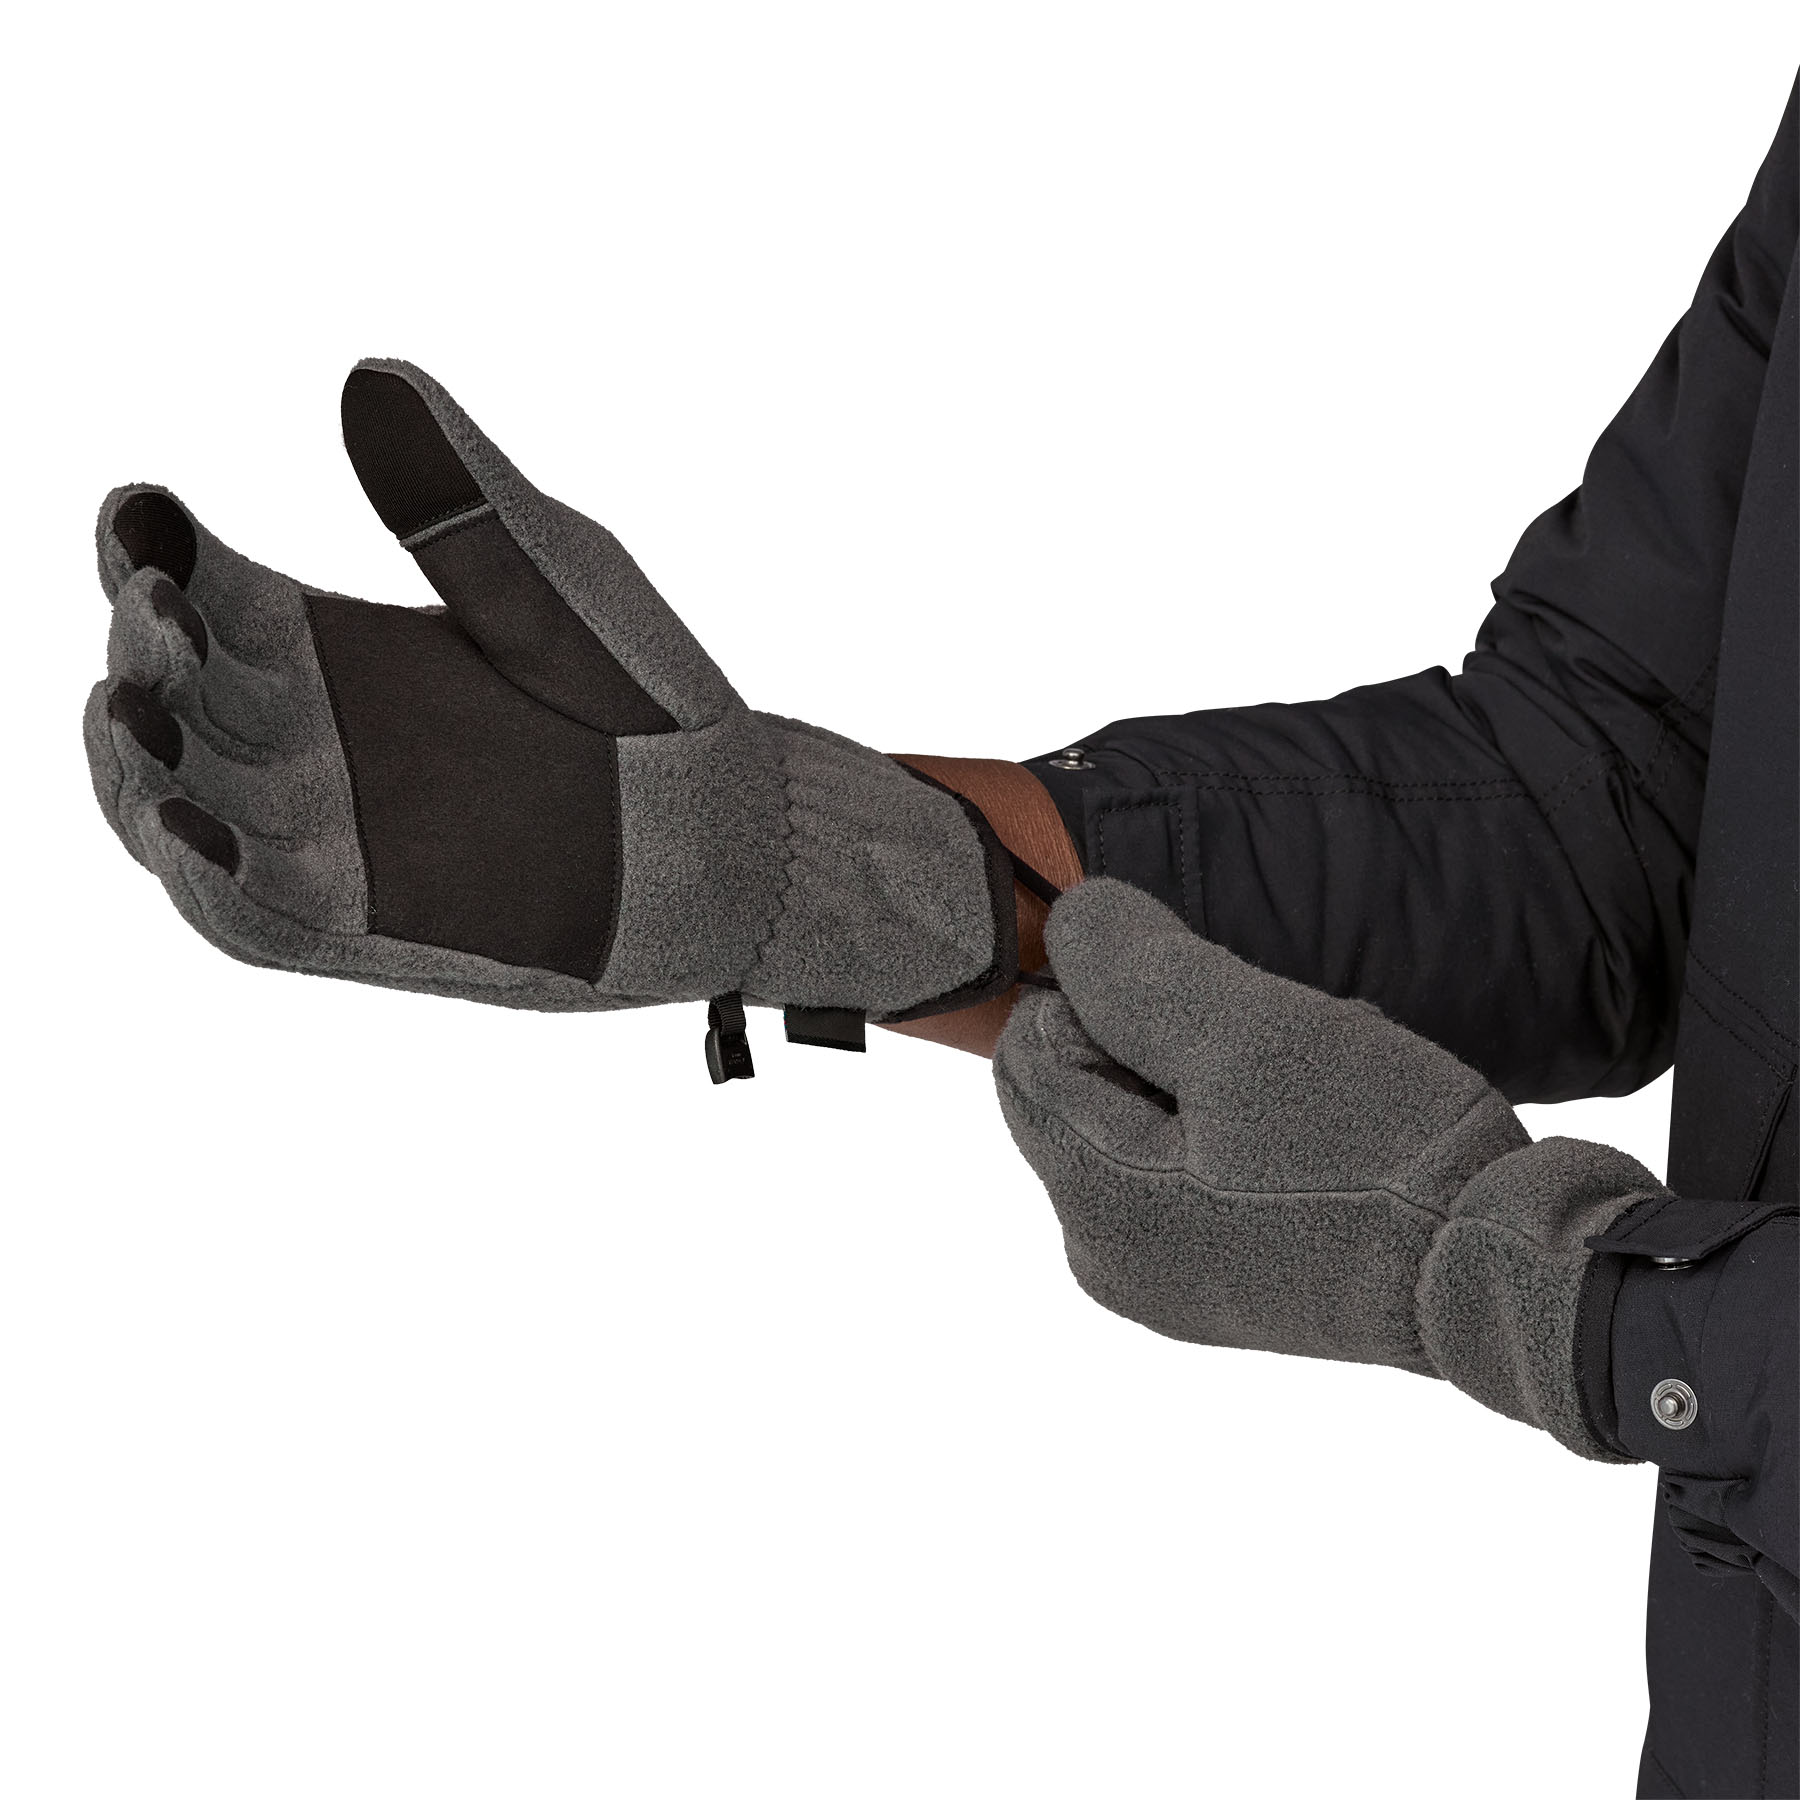 Synchilla Gloves (forge grey)